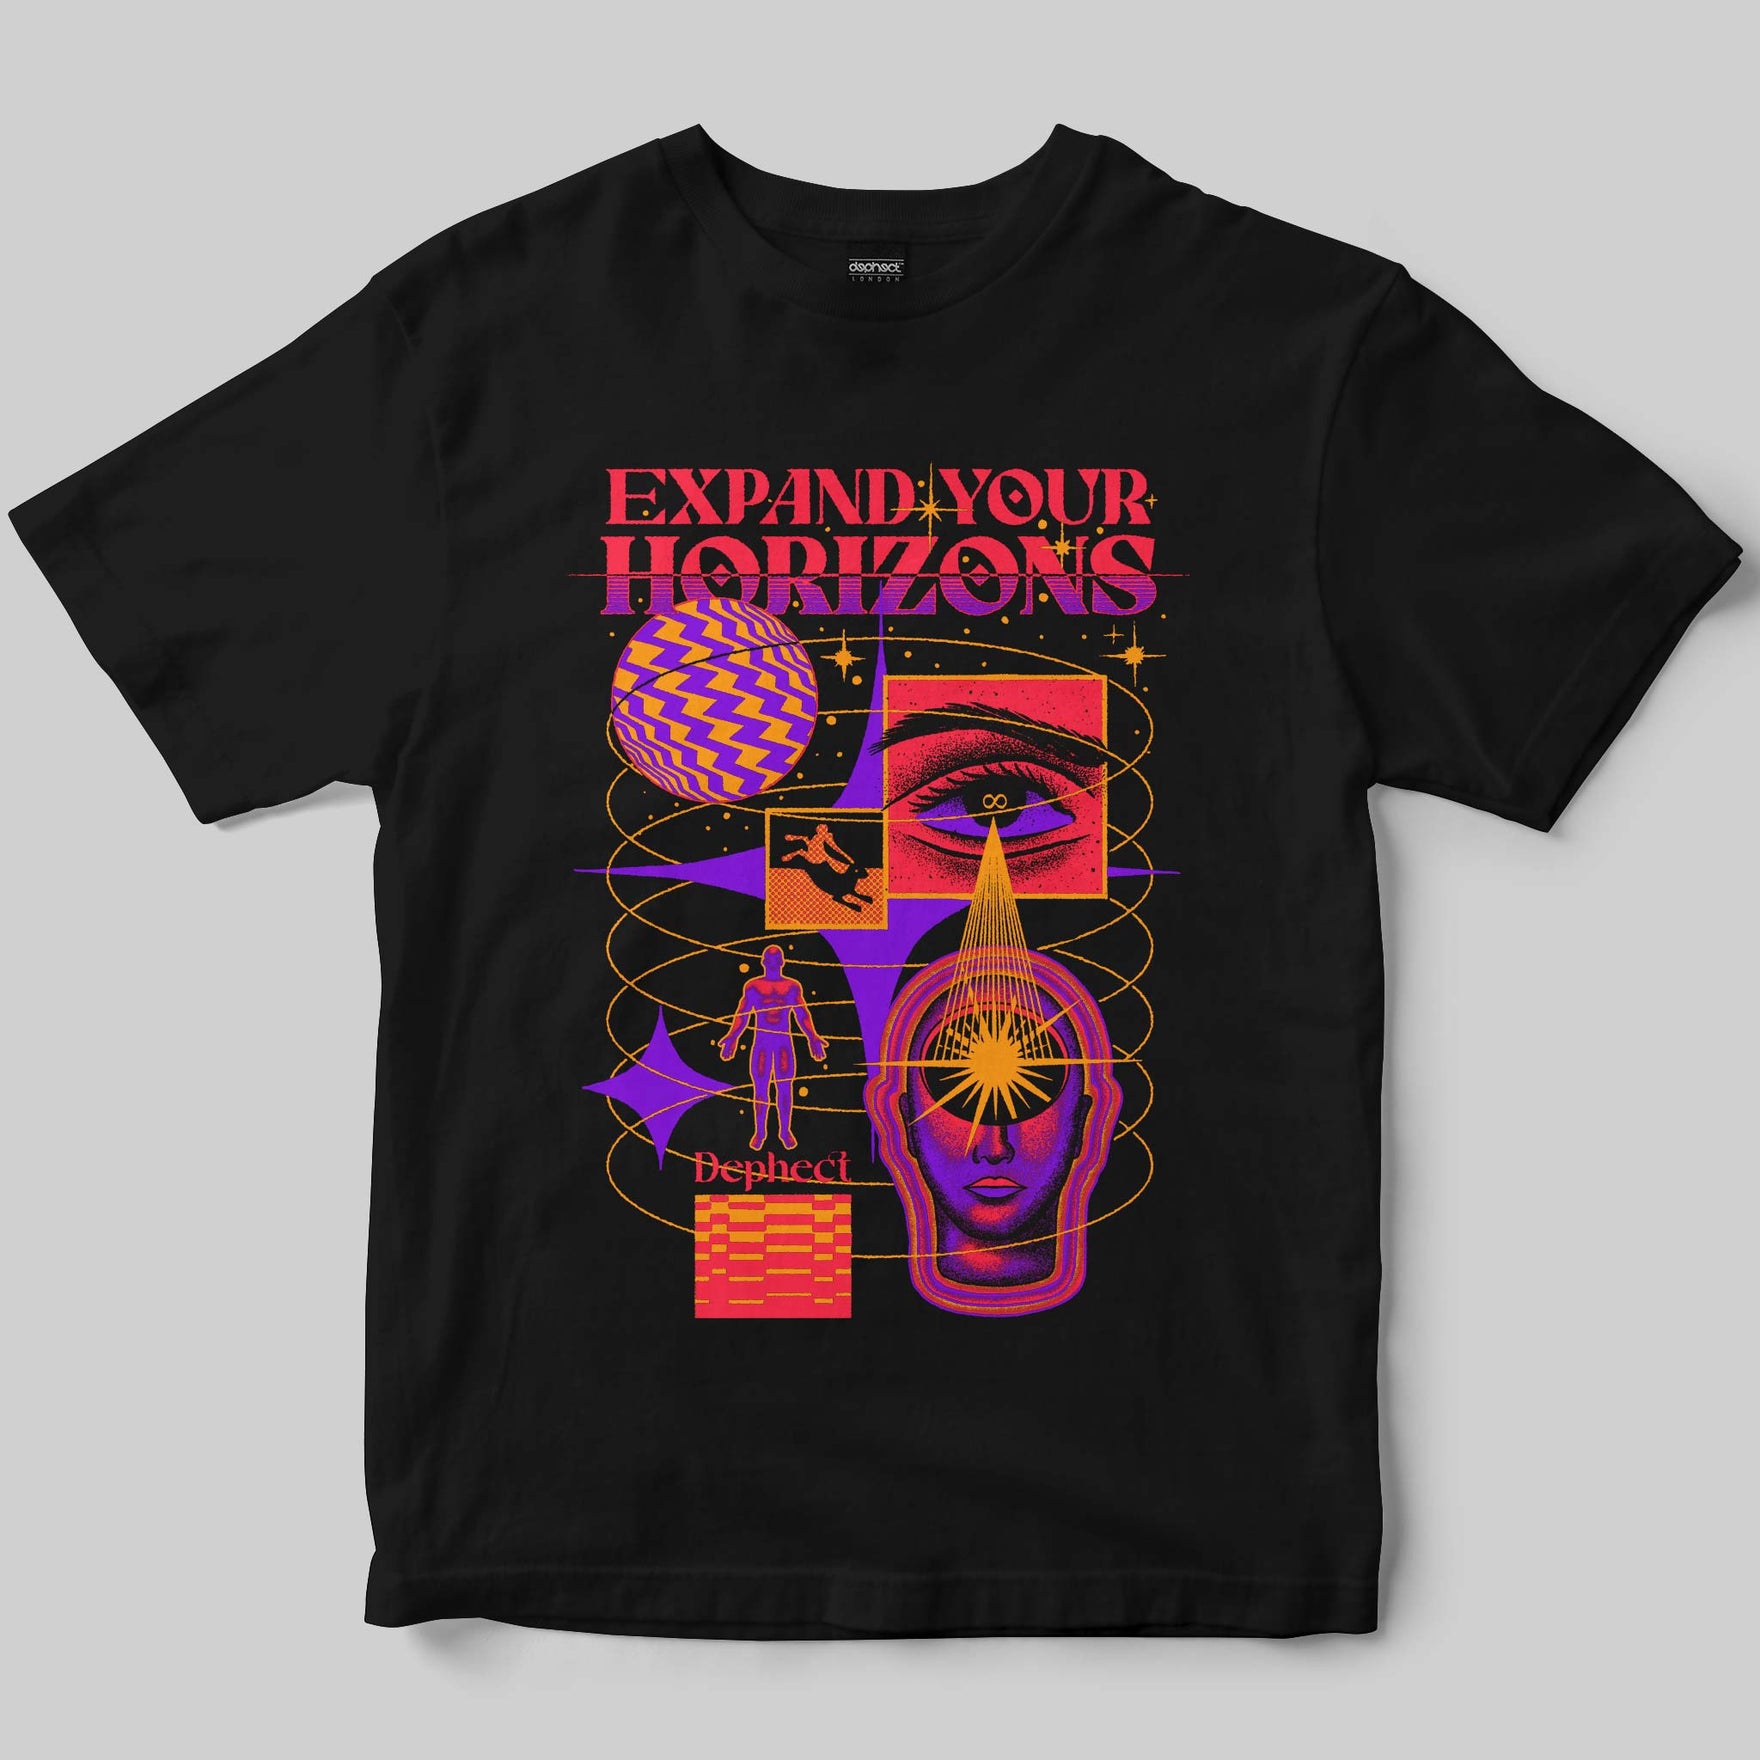 Horizons T-Shirt / Black / by Manifiesto 79